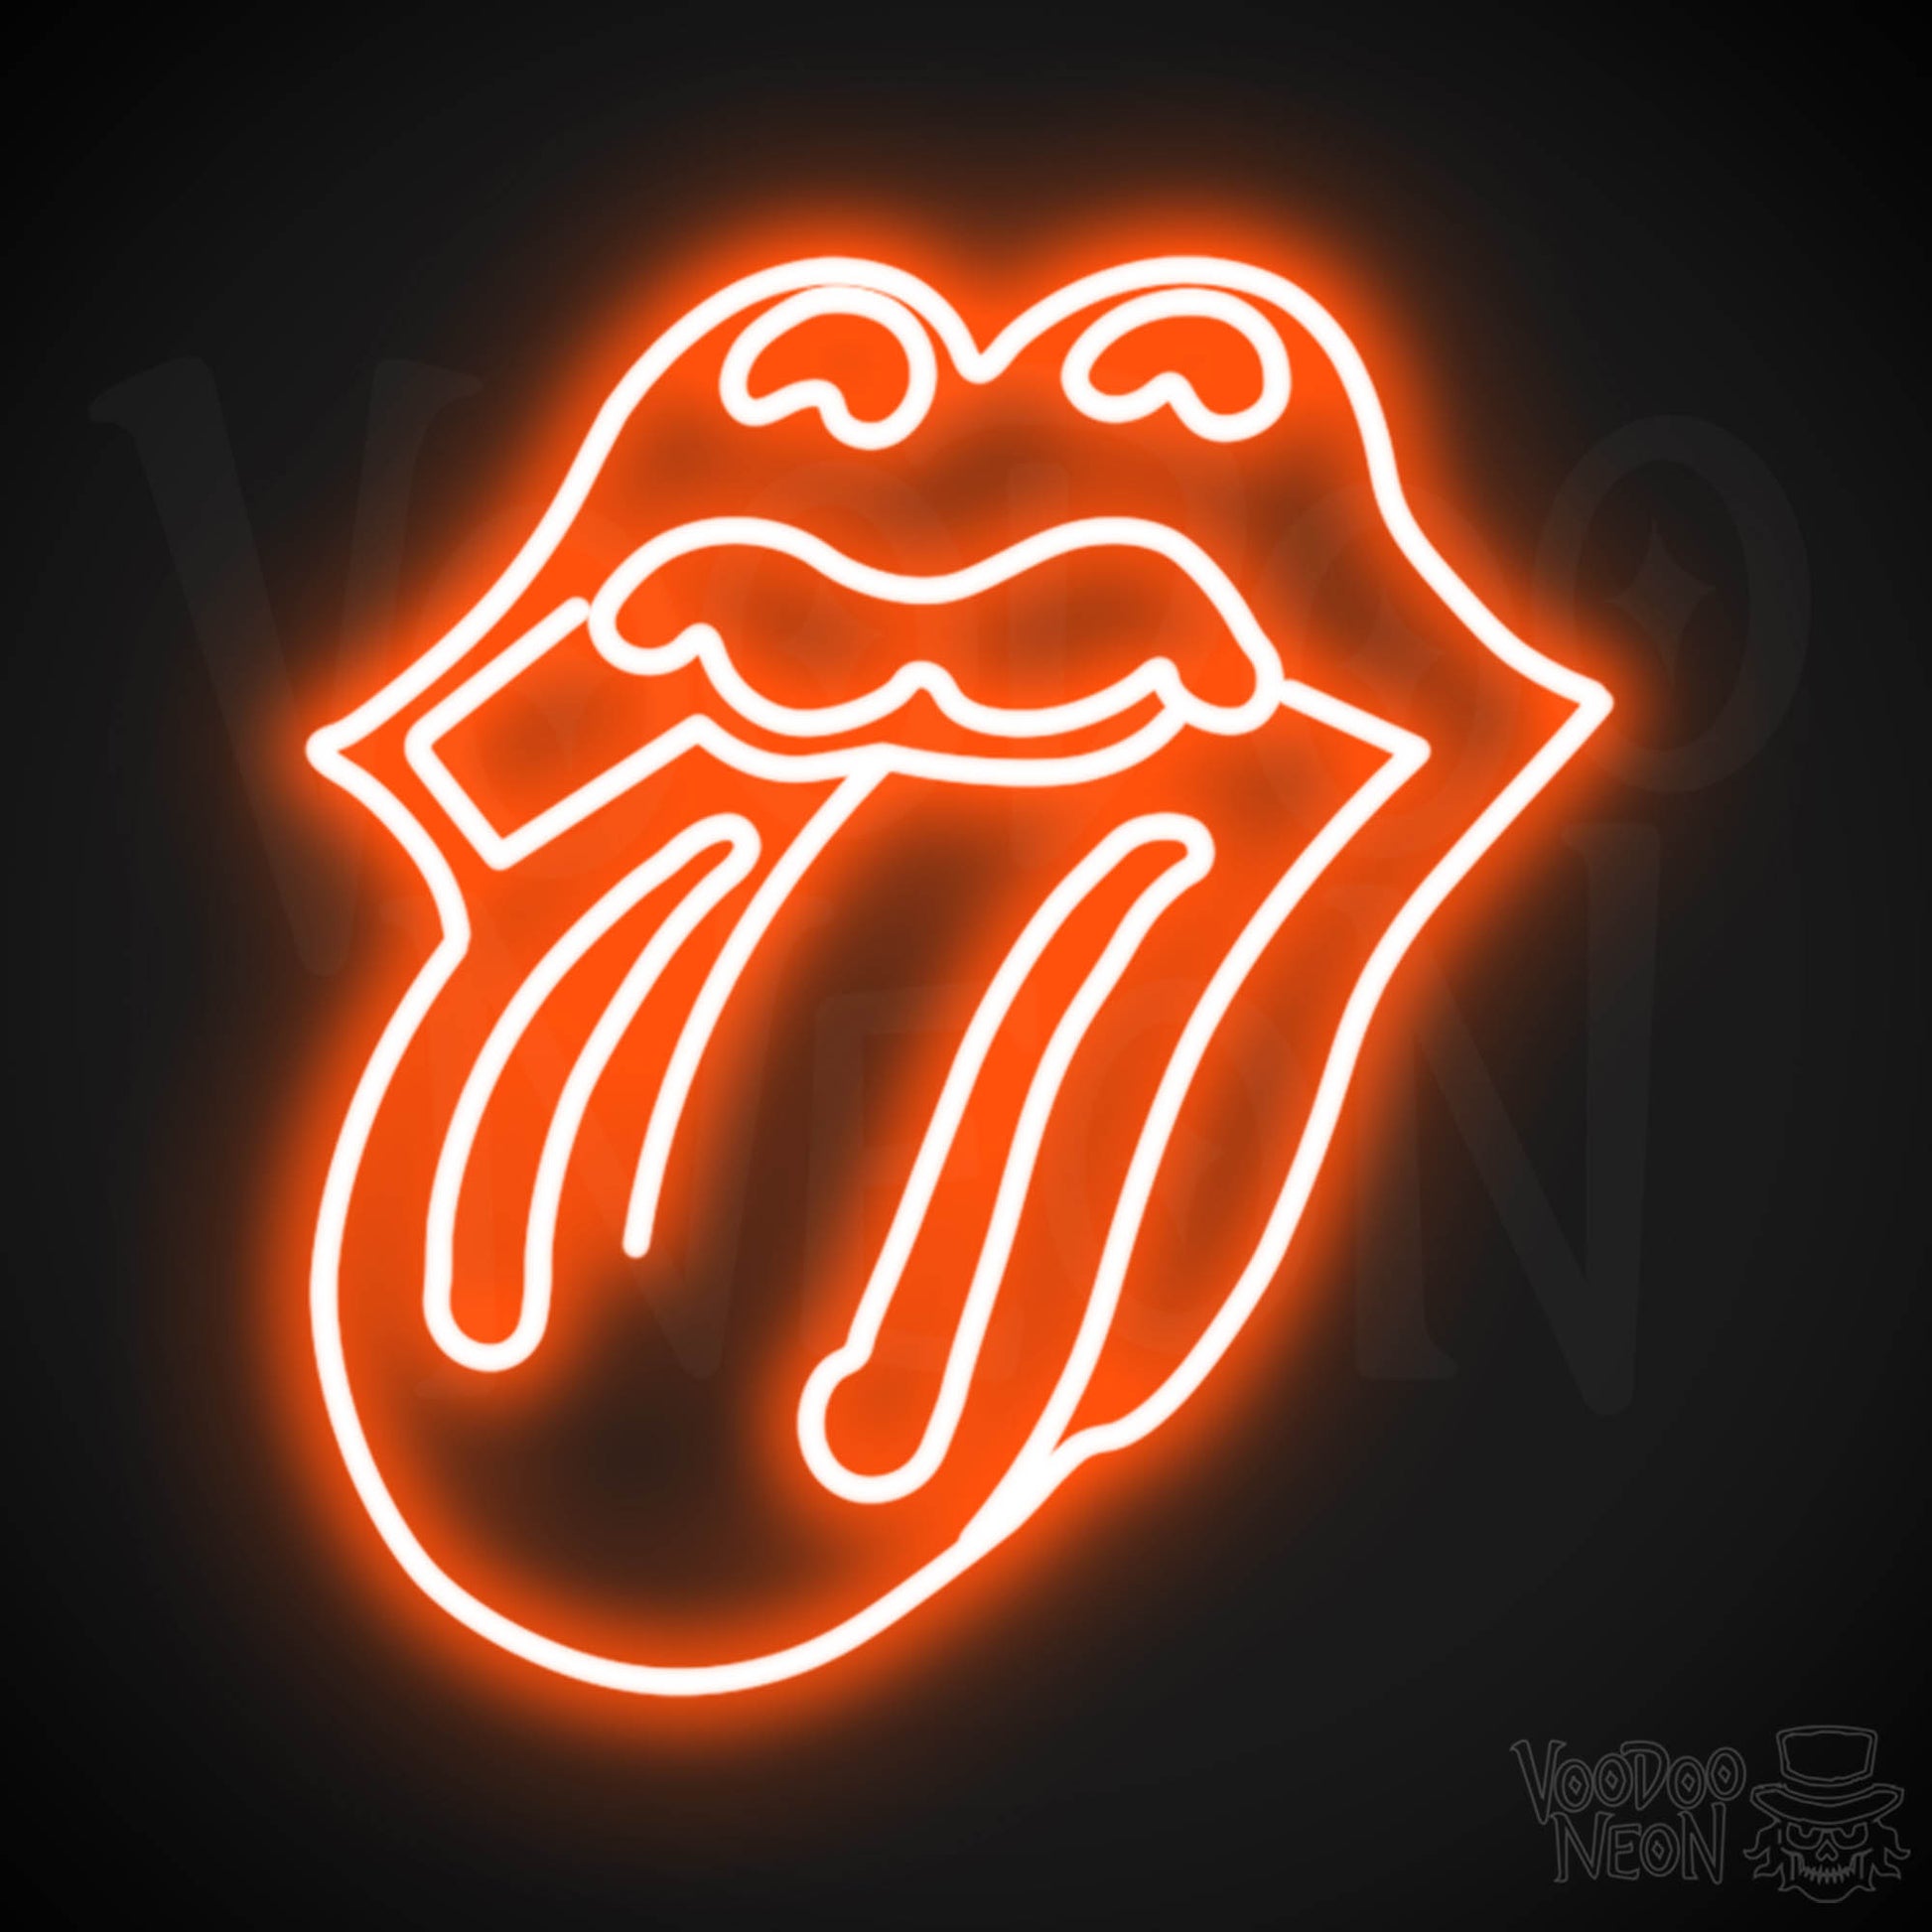 Rolling Stones Neon Sign - Rolling Stones Sign - Neon Rolling Stones Logo Wall Art - Color Orange